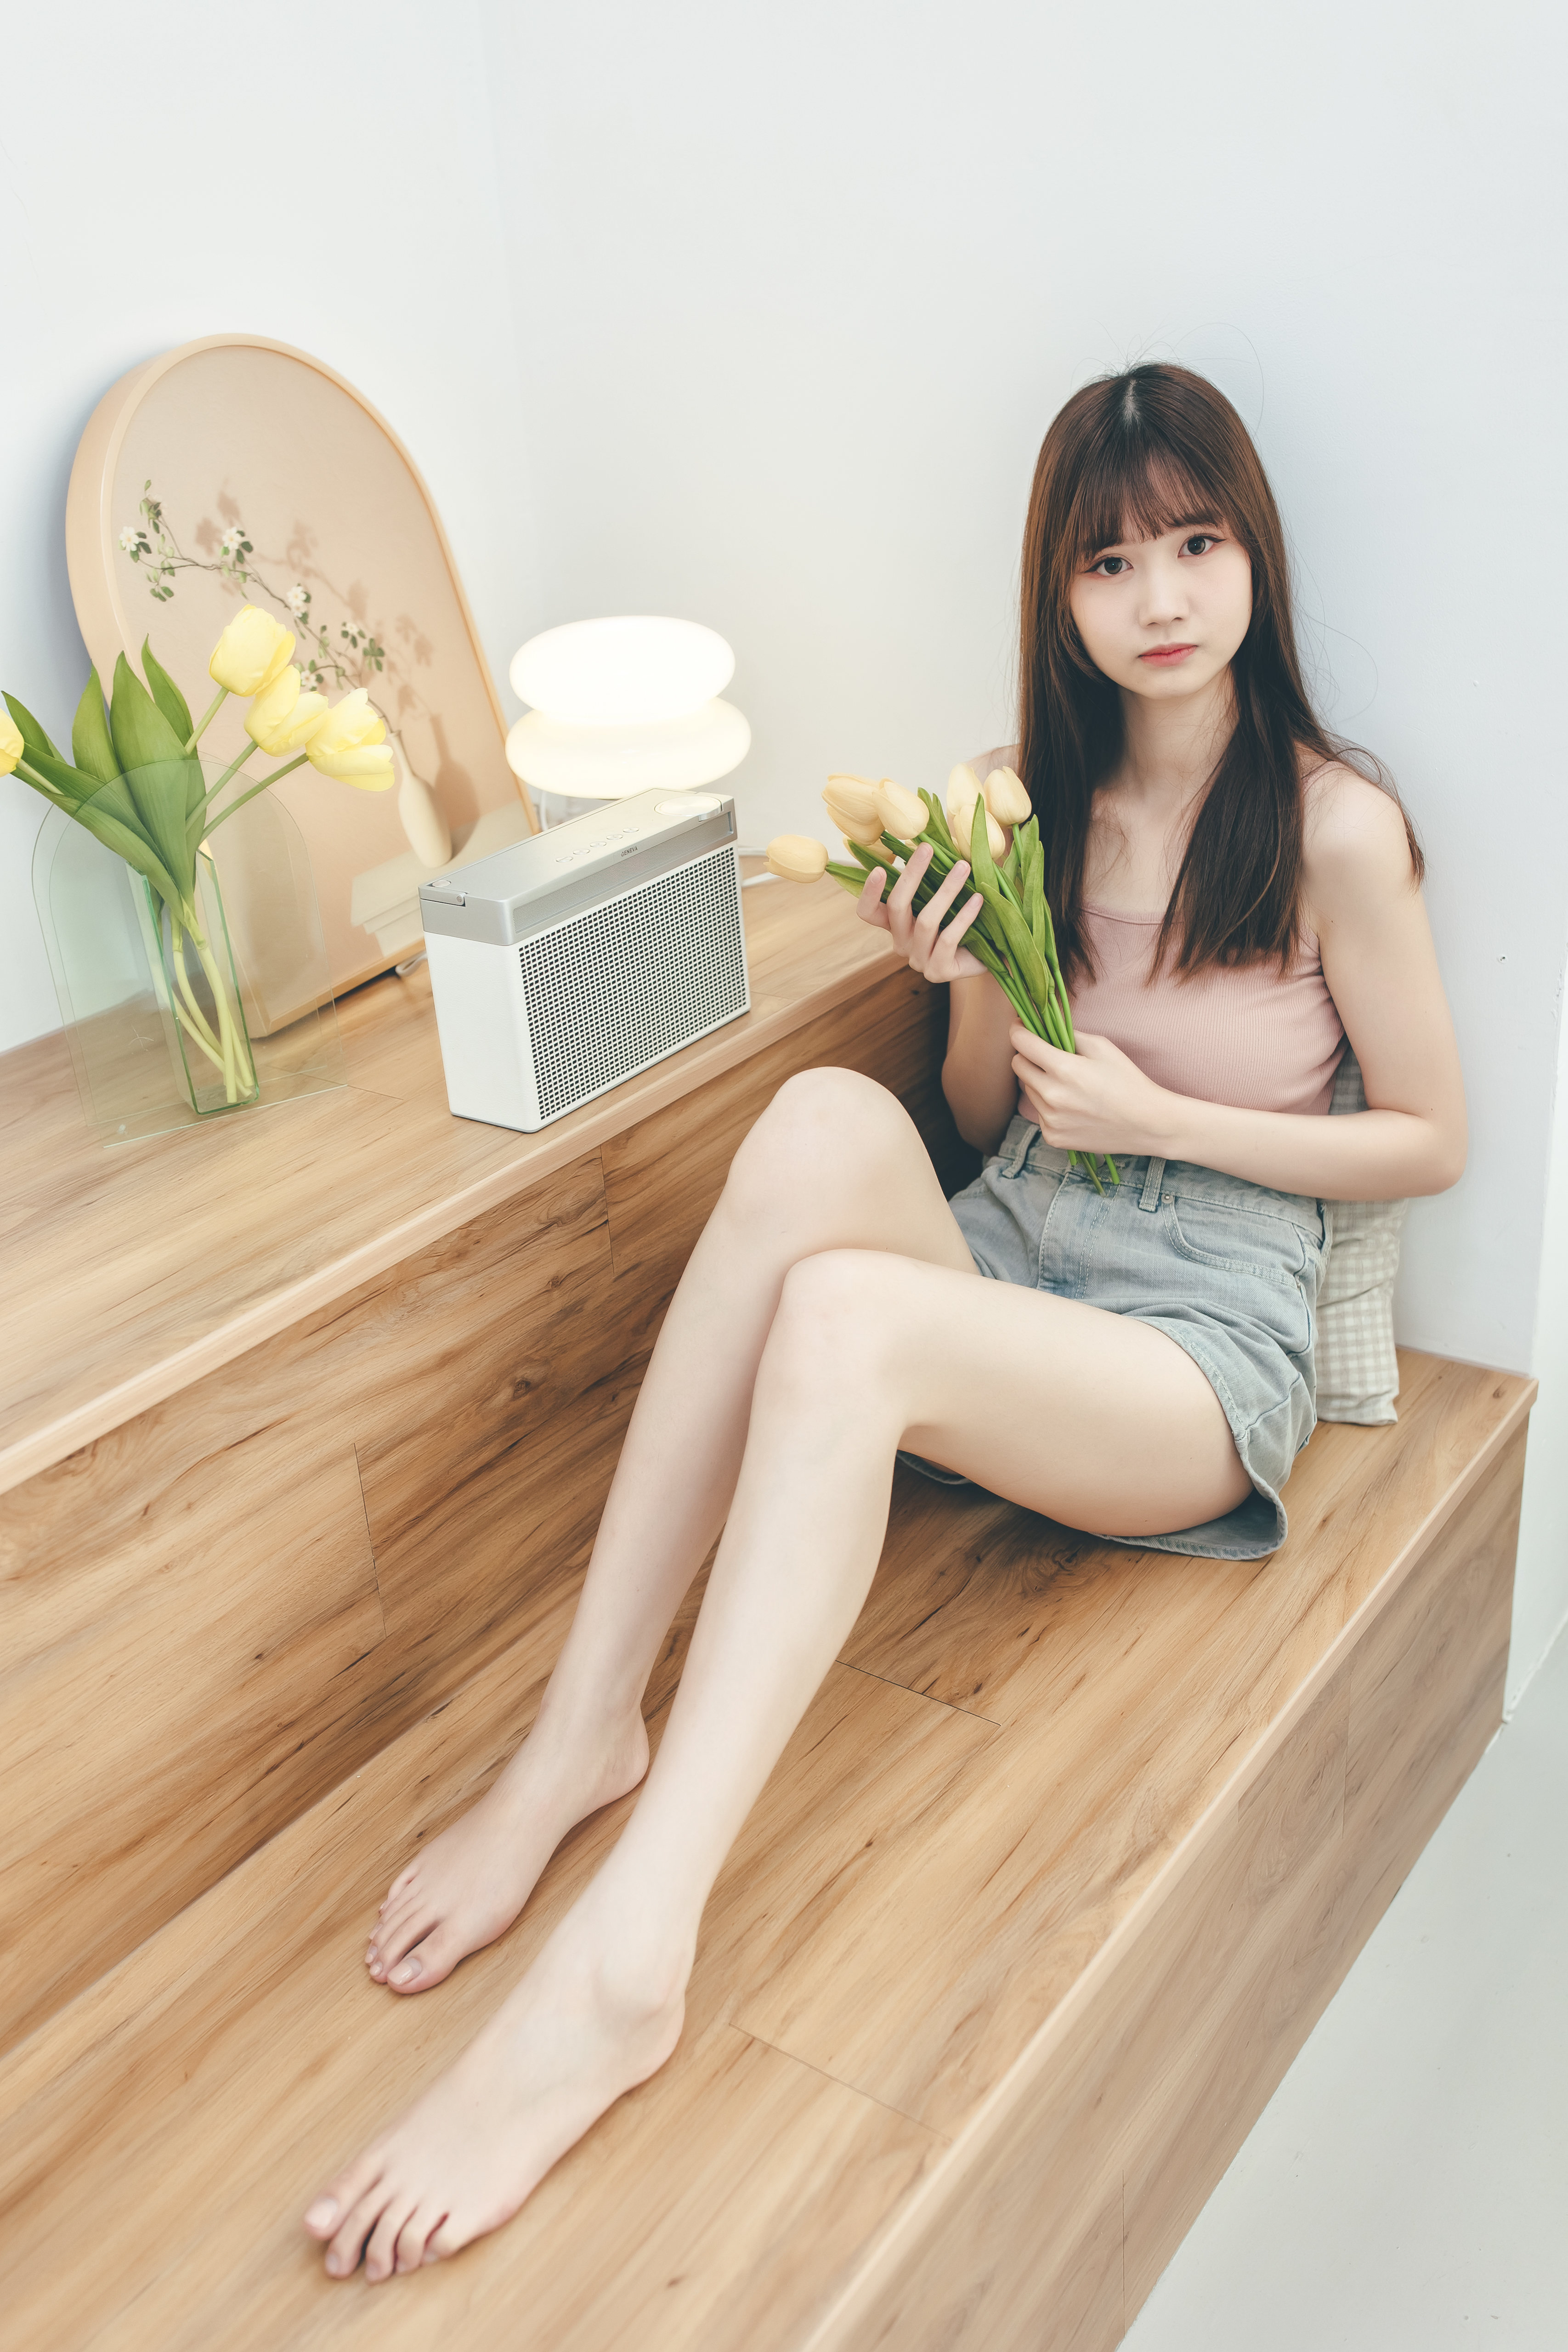 People 3413x5120 Ru Lin women Asian bangs legs barefoot wooden surface